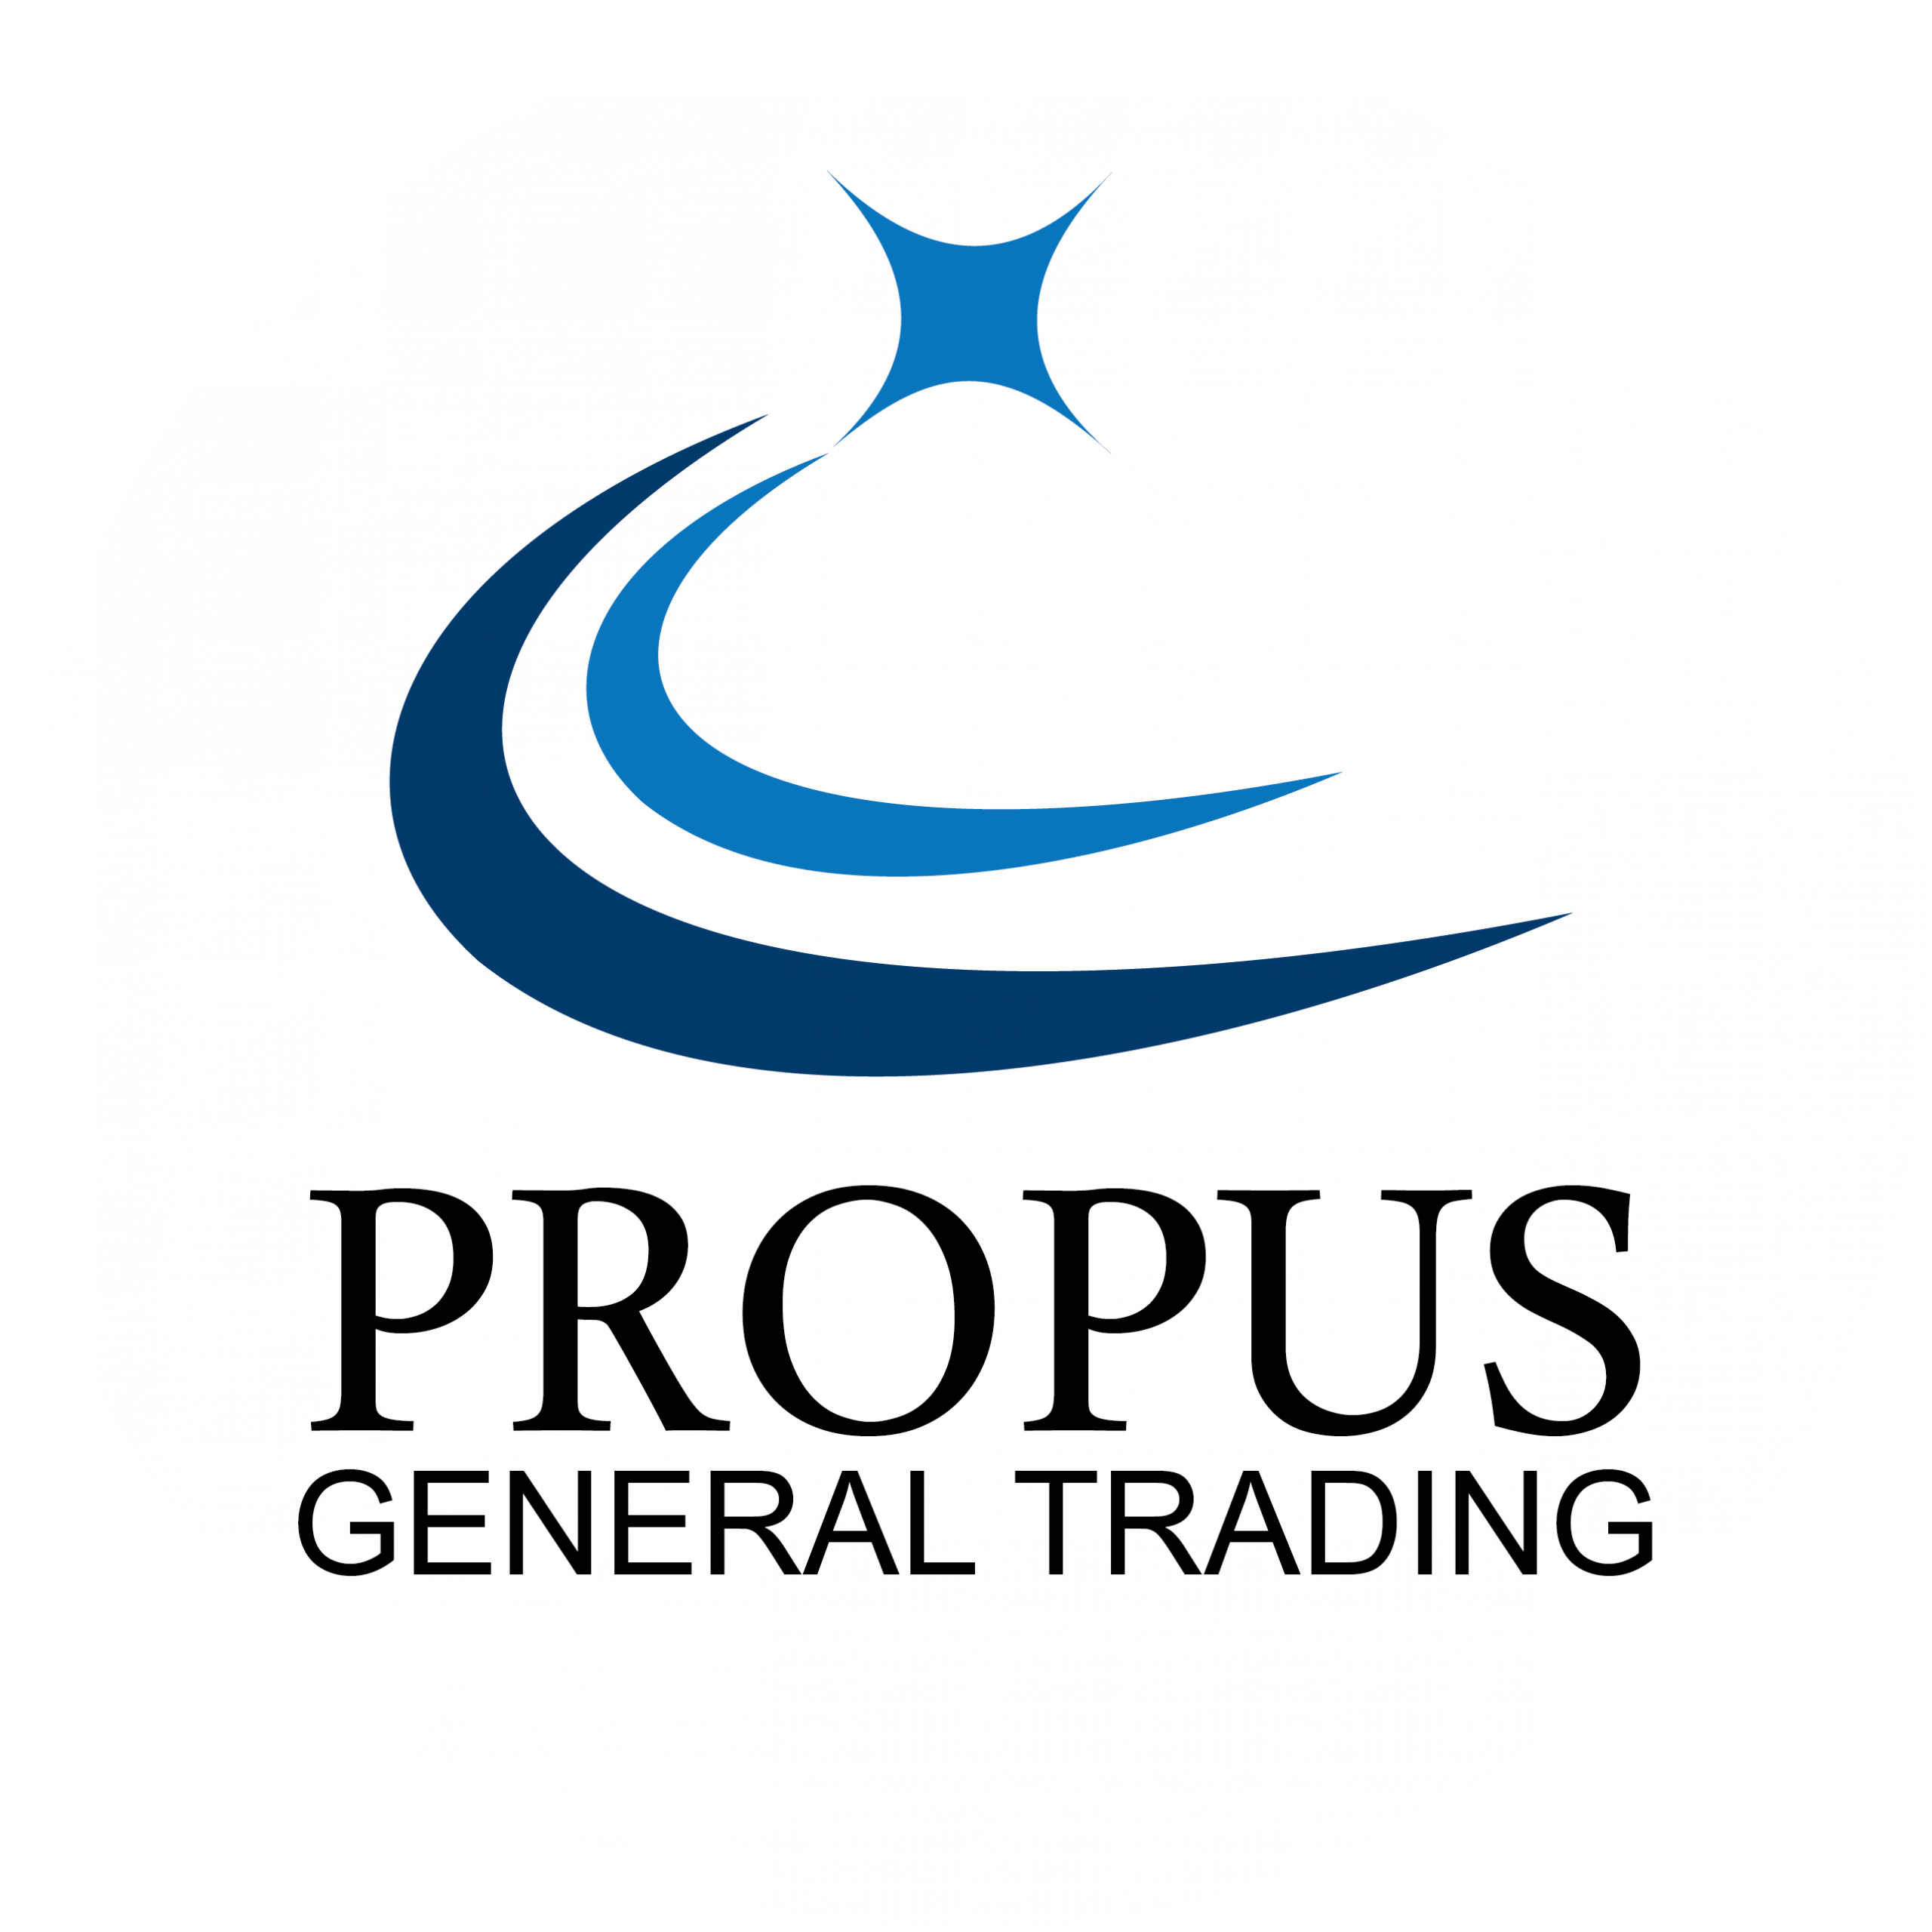 propus logo white circle background